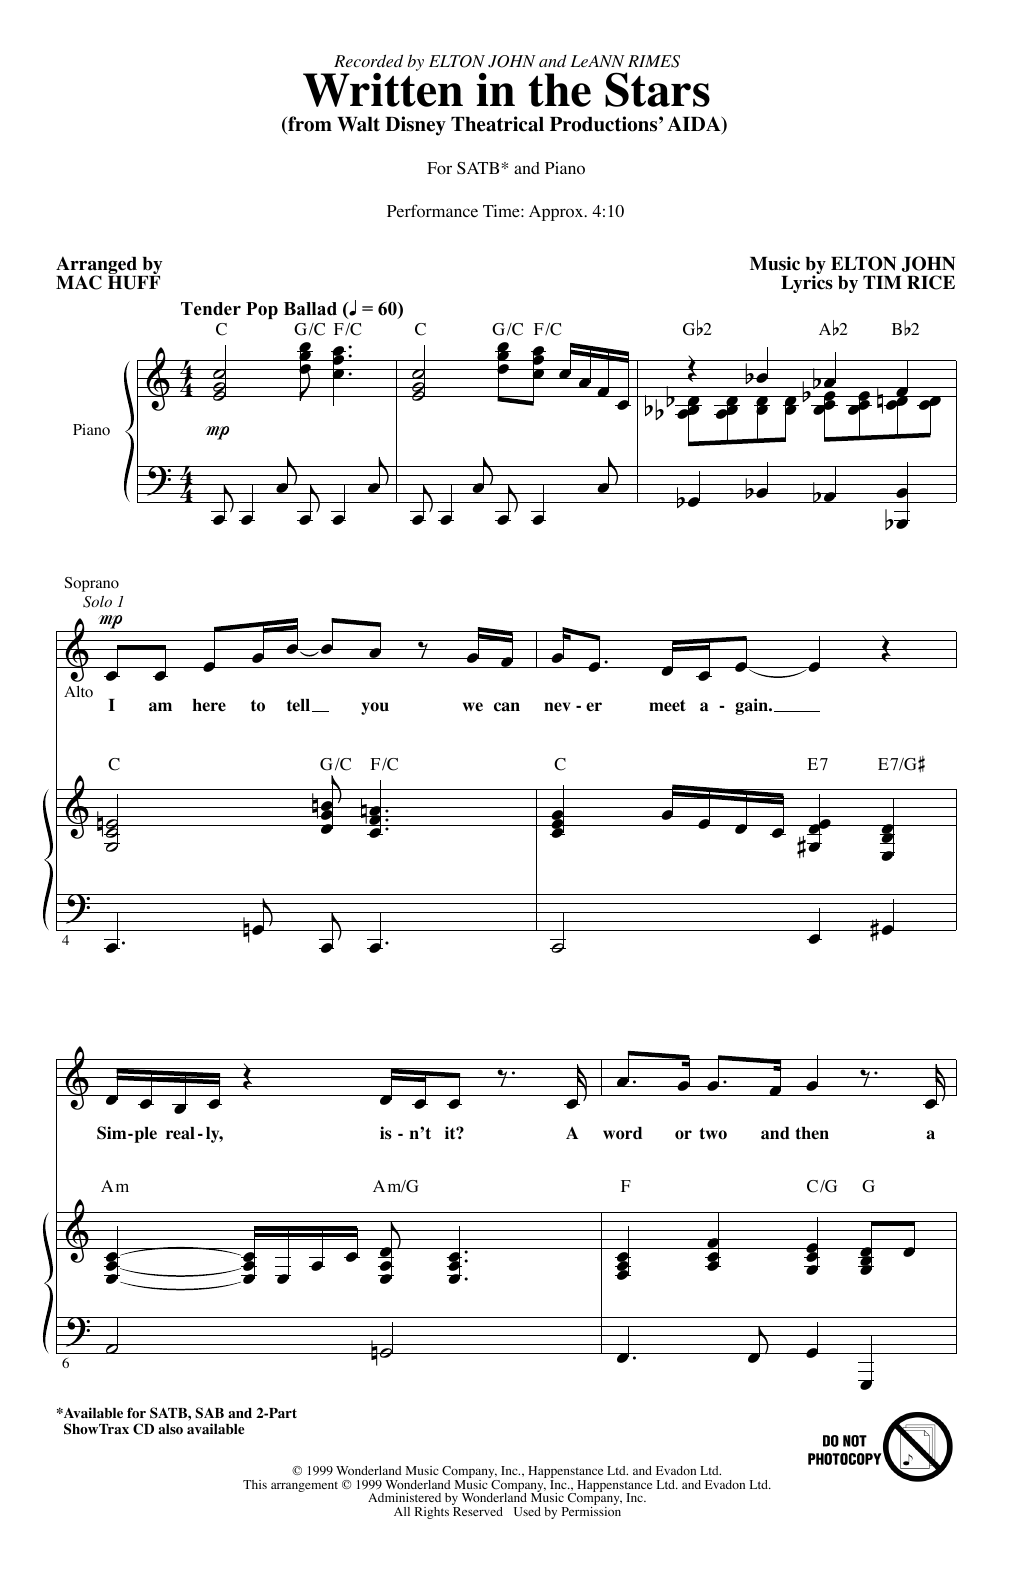 Elton John & LeAnn Rimes Written In The Stars (from Aida) (arr. Mac Huff) Sheet Music Notes & Chords for SAB Choir - Download or Print PDF